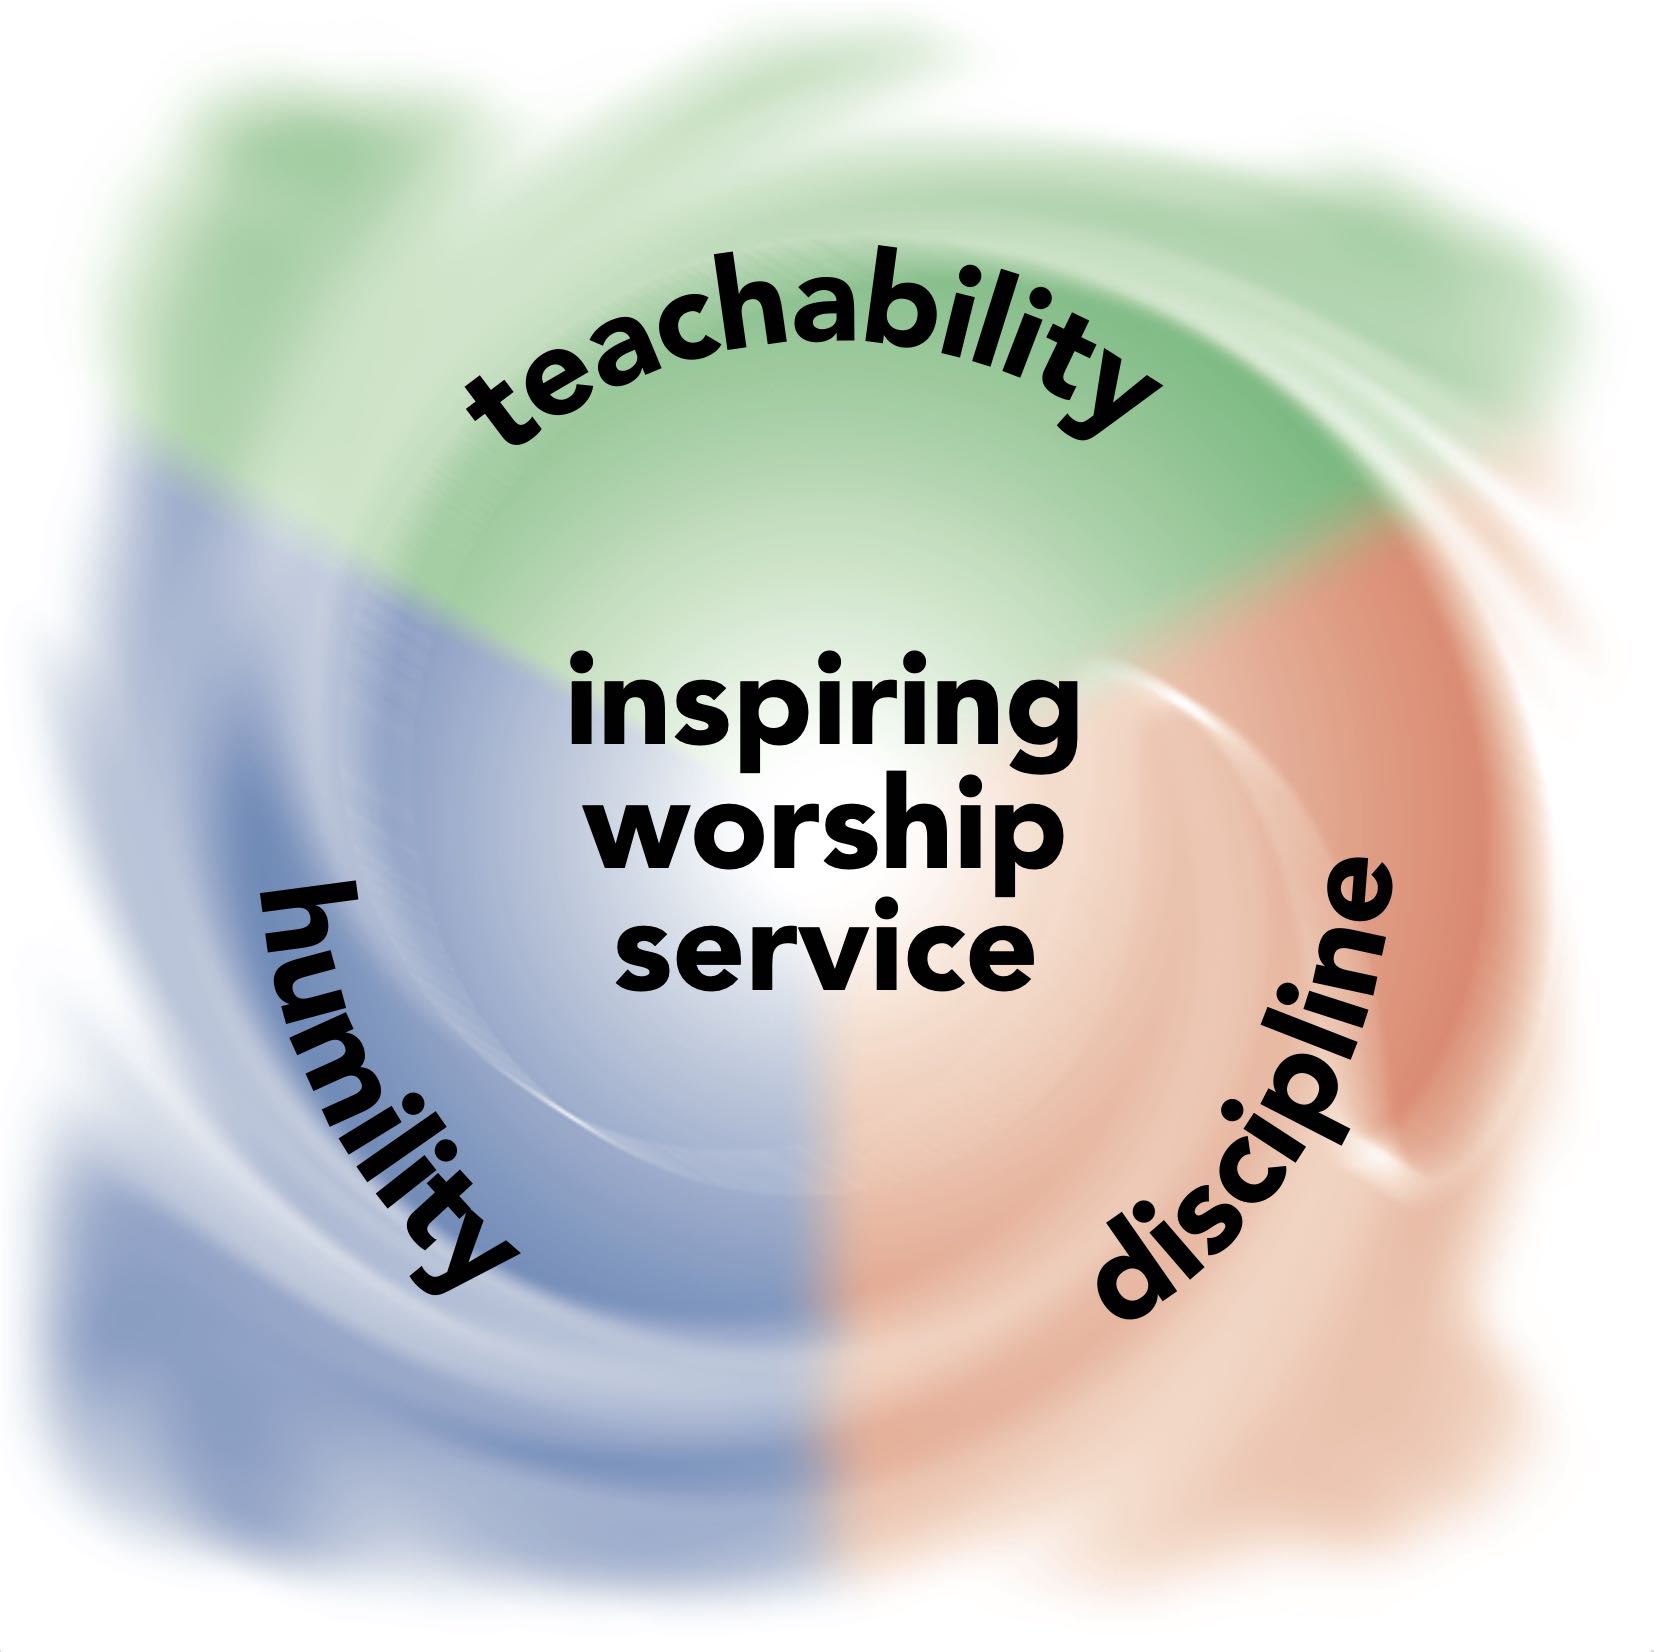 inspiring worship service - teachability, discipline and humility